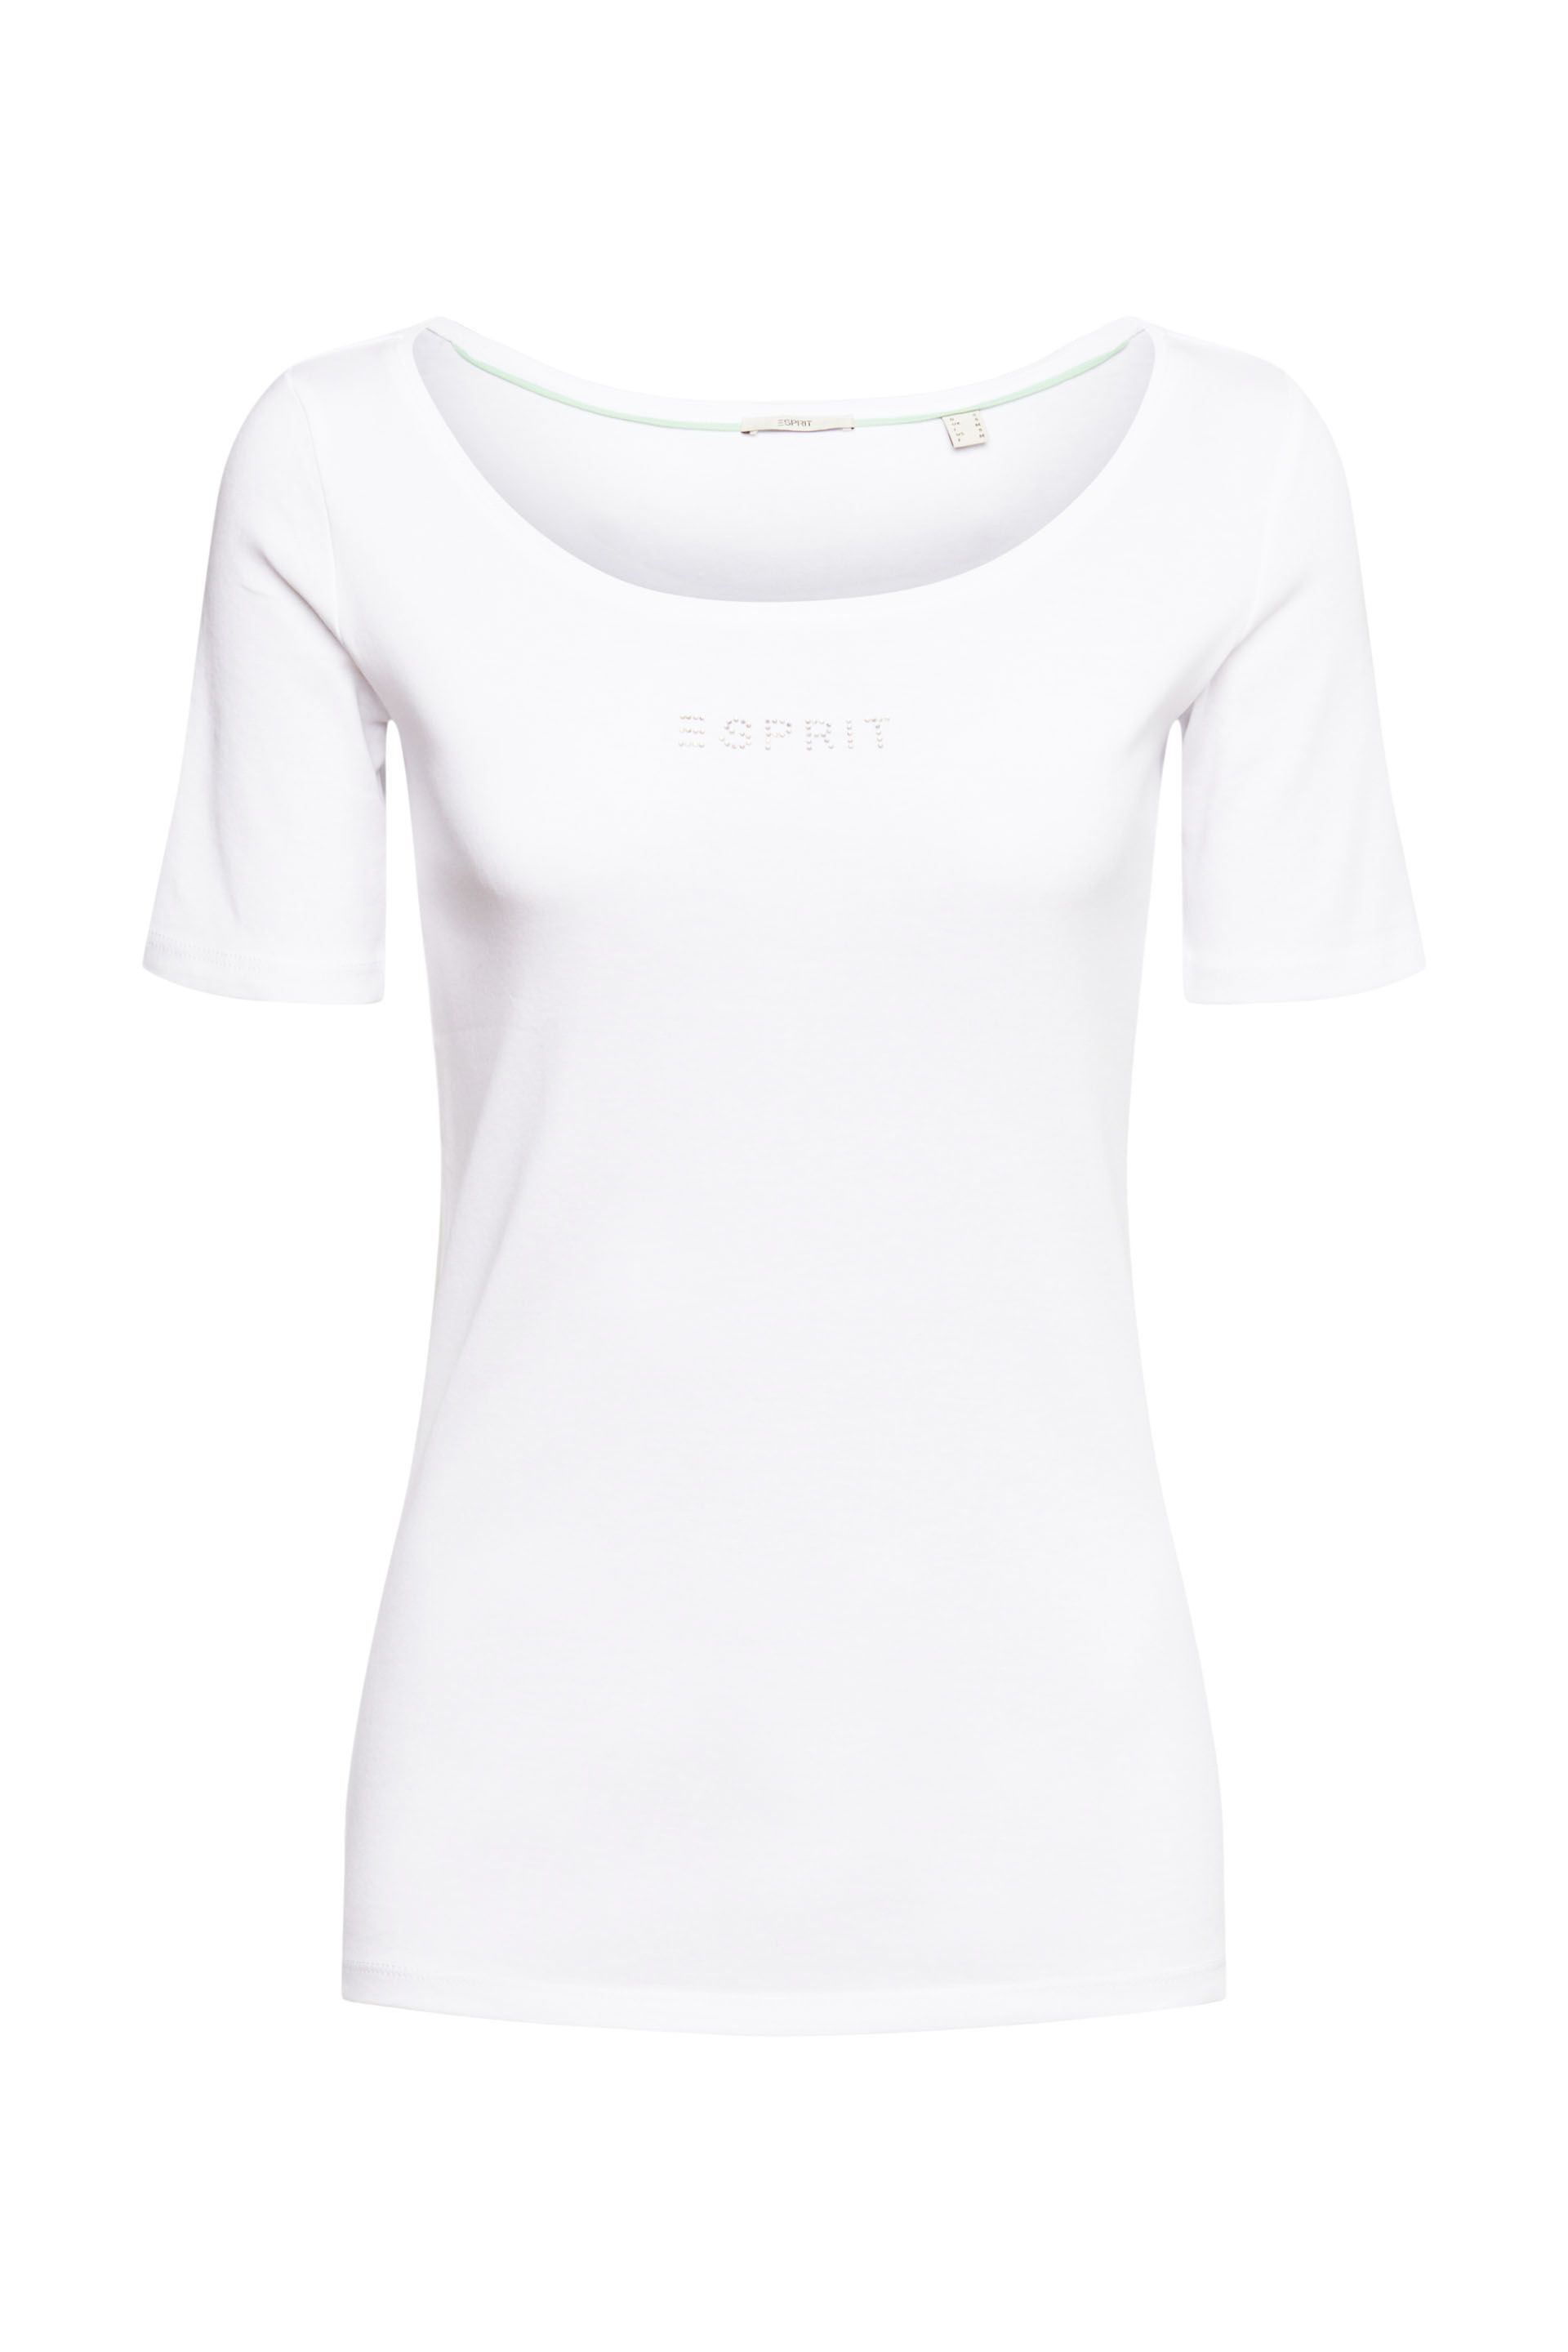 Esprit - Cotton logo T-shirt, White, large image number 0